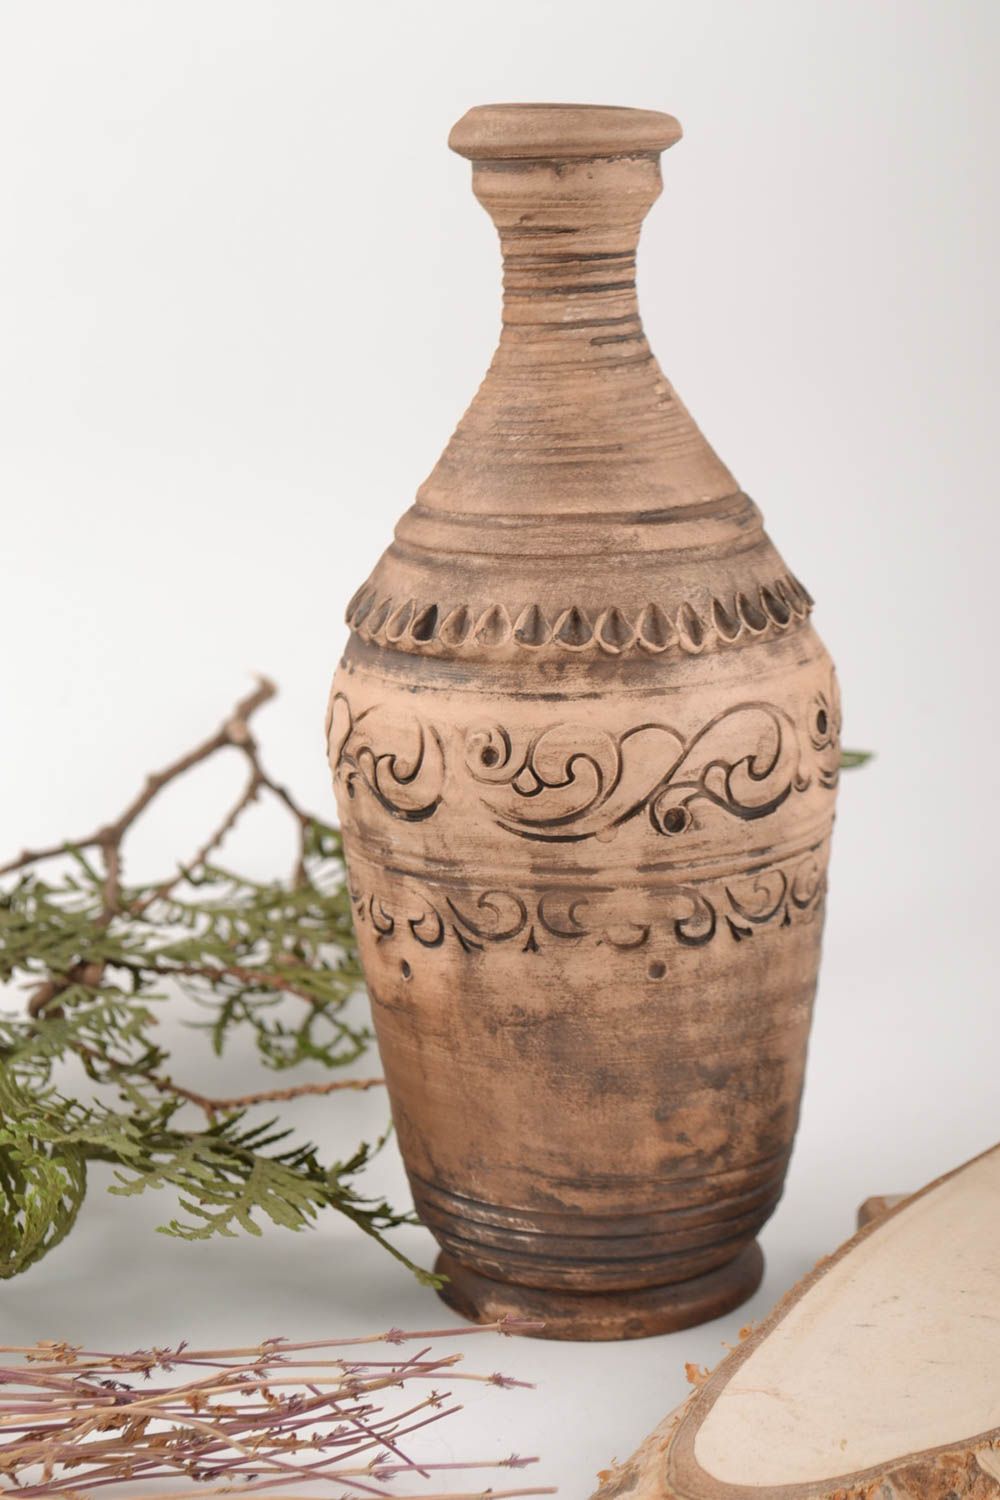 15 oz ceramic bottle shape ceramic pitcher carafe made of white clay 0,9 lb photo 1